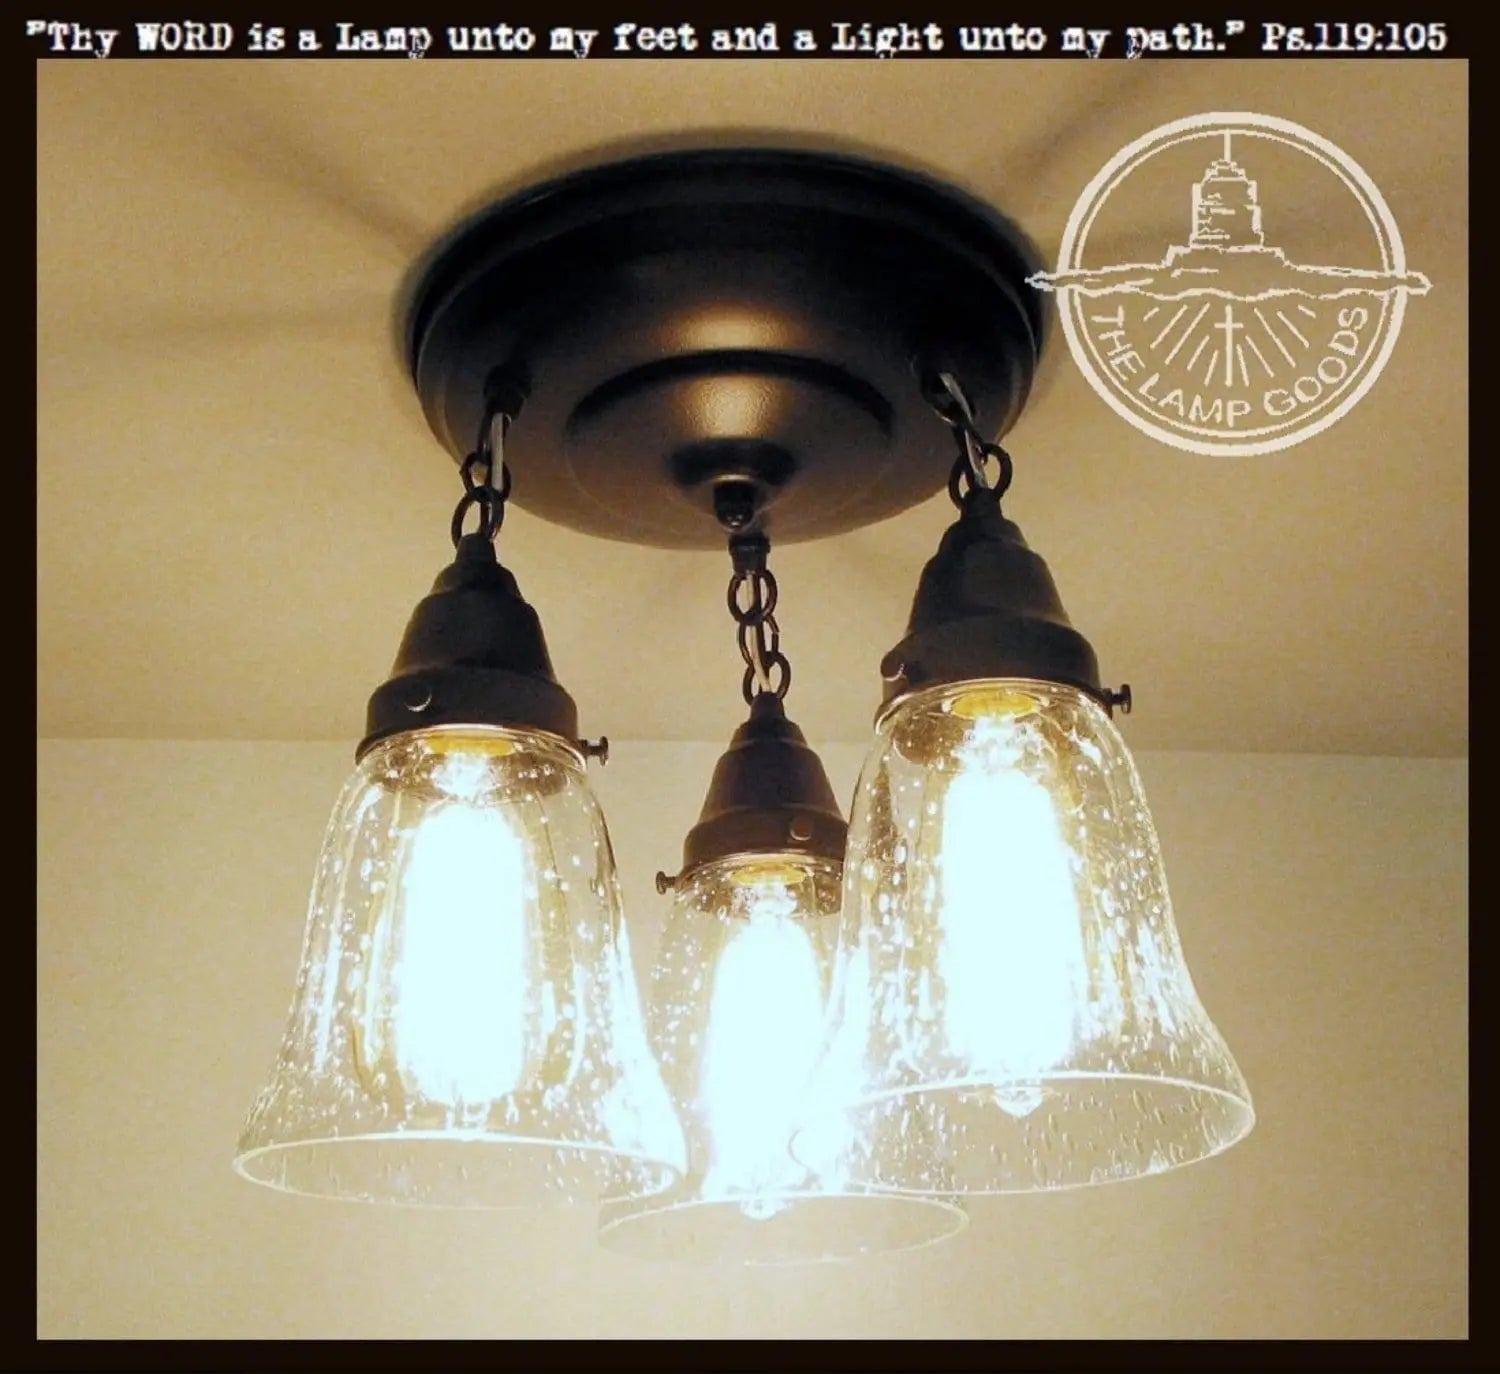 Kellie II. Seeded Glass Ceiling LIGHT Trio - The Lamp Goods